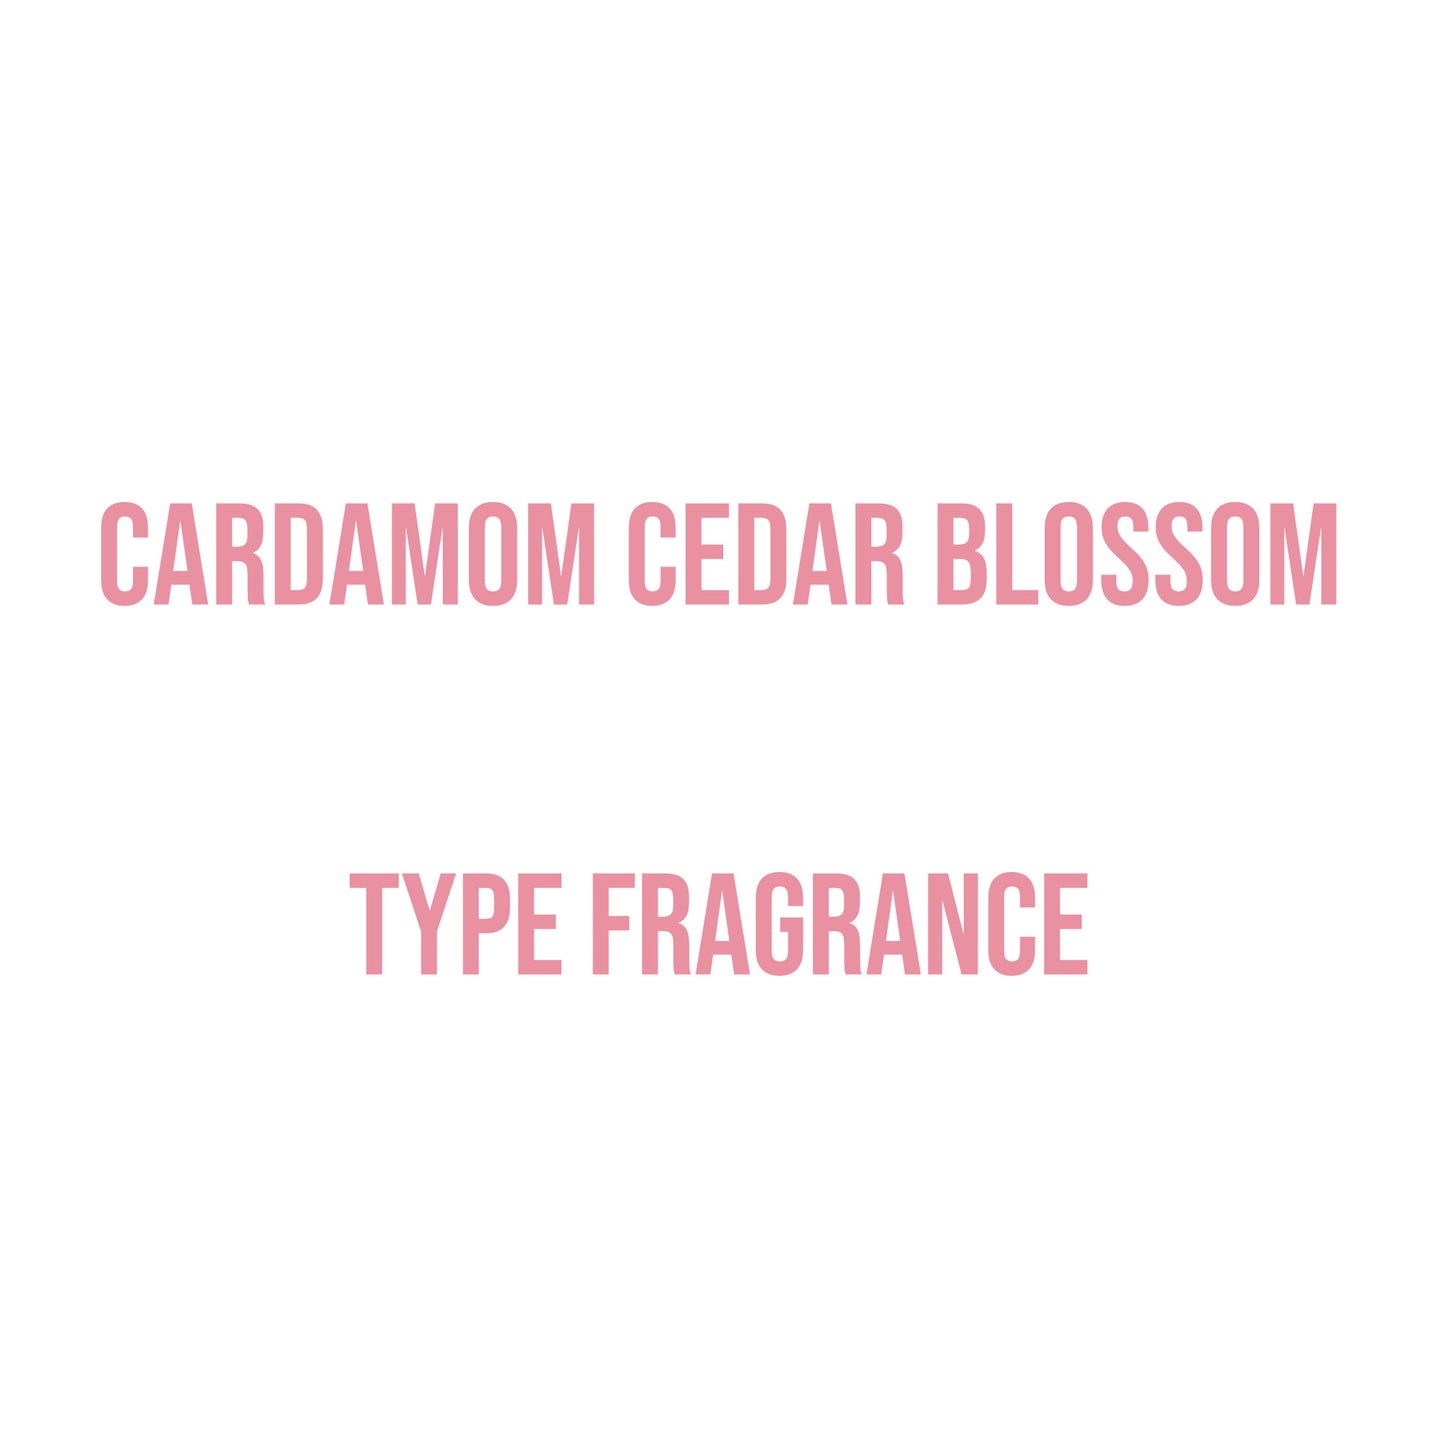 Cardamom Cedar Blossom Type Fragrance